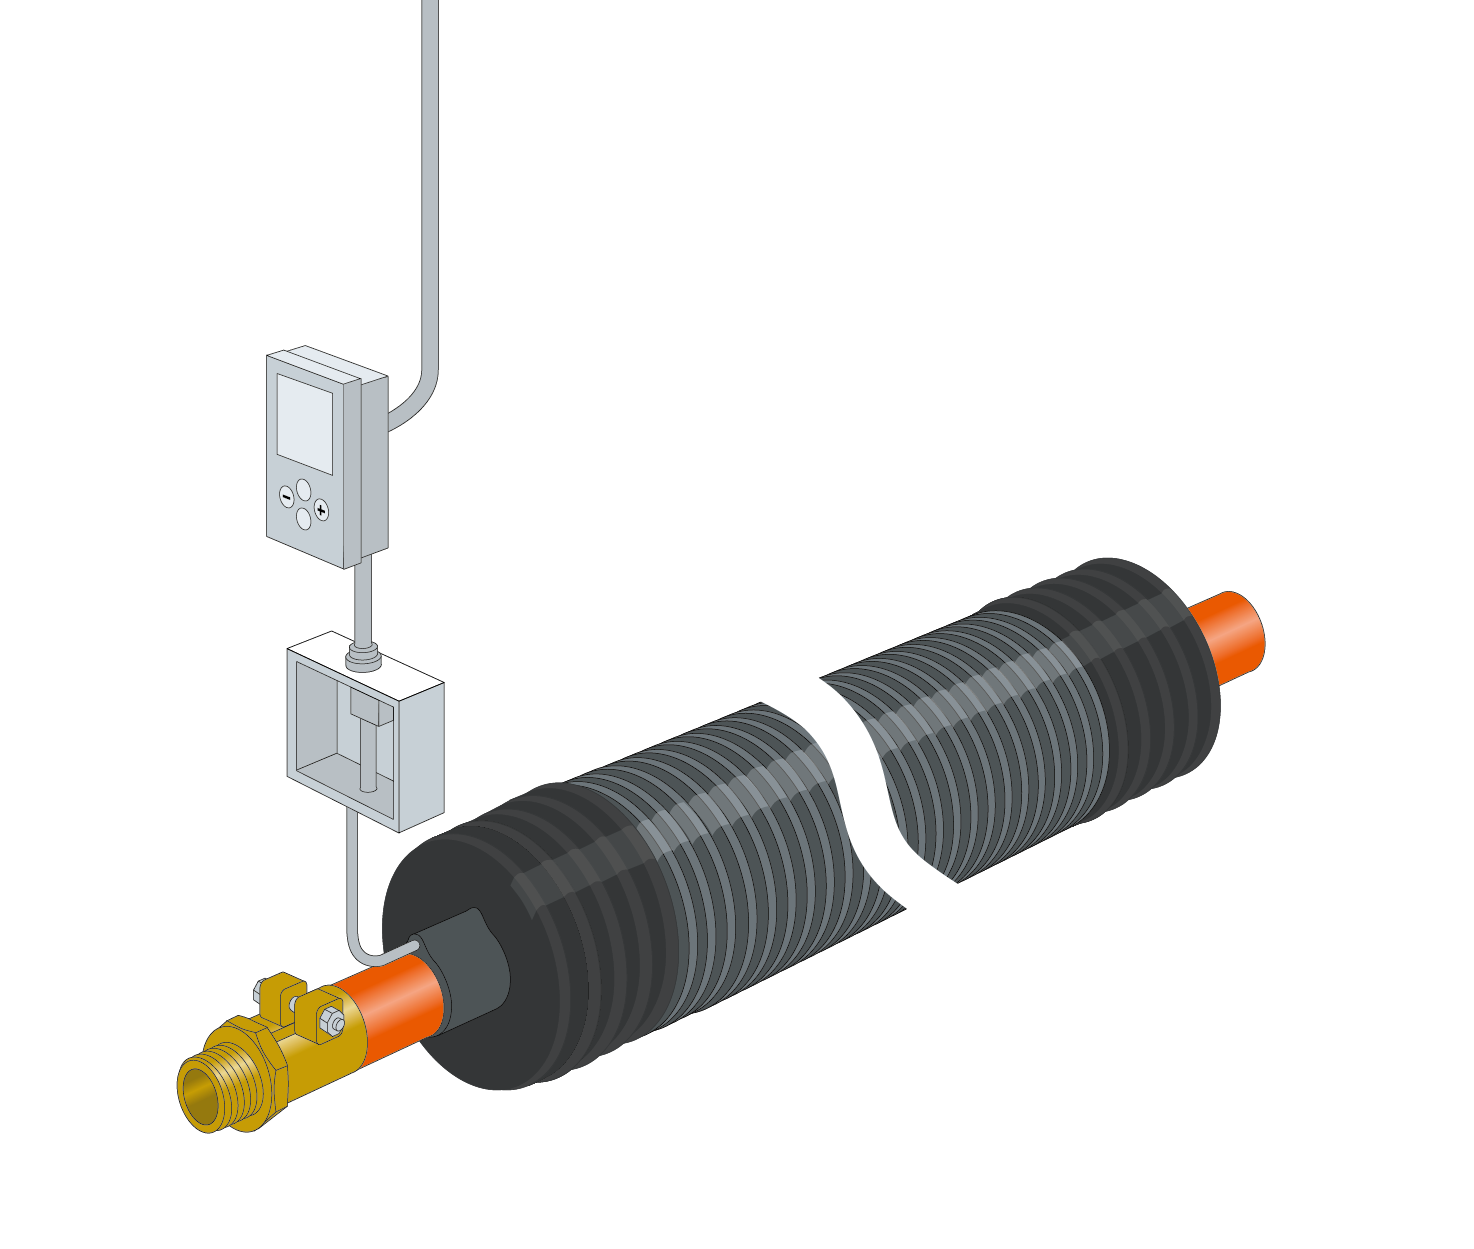 Câble chauffant Câble antigel Traçage de tuyaux autorégulant avec